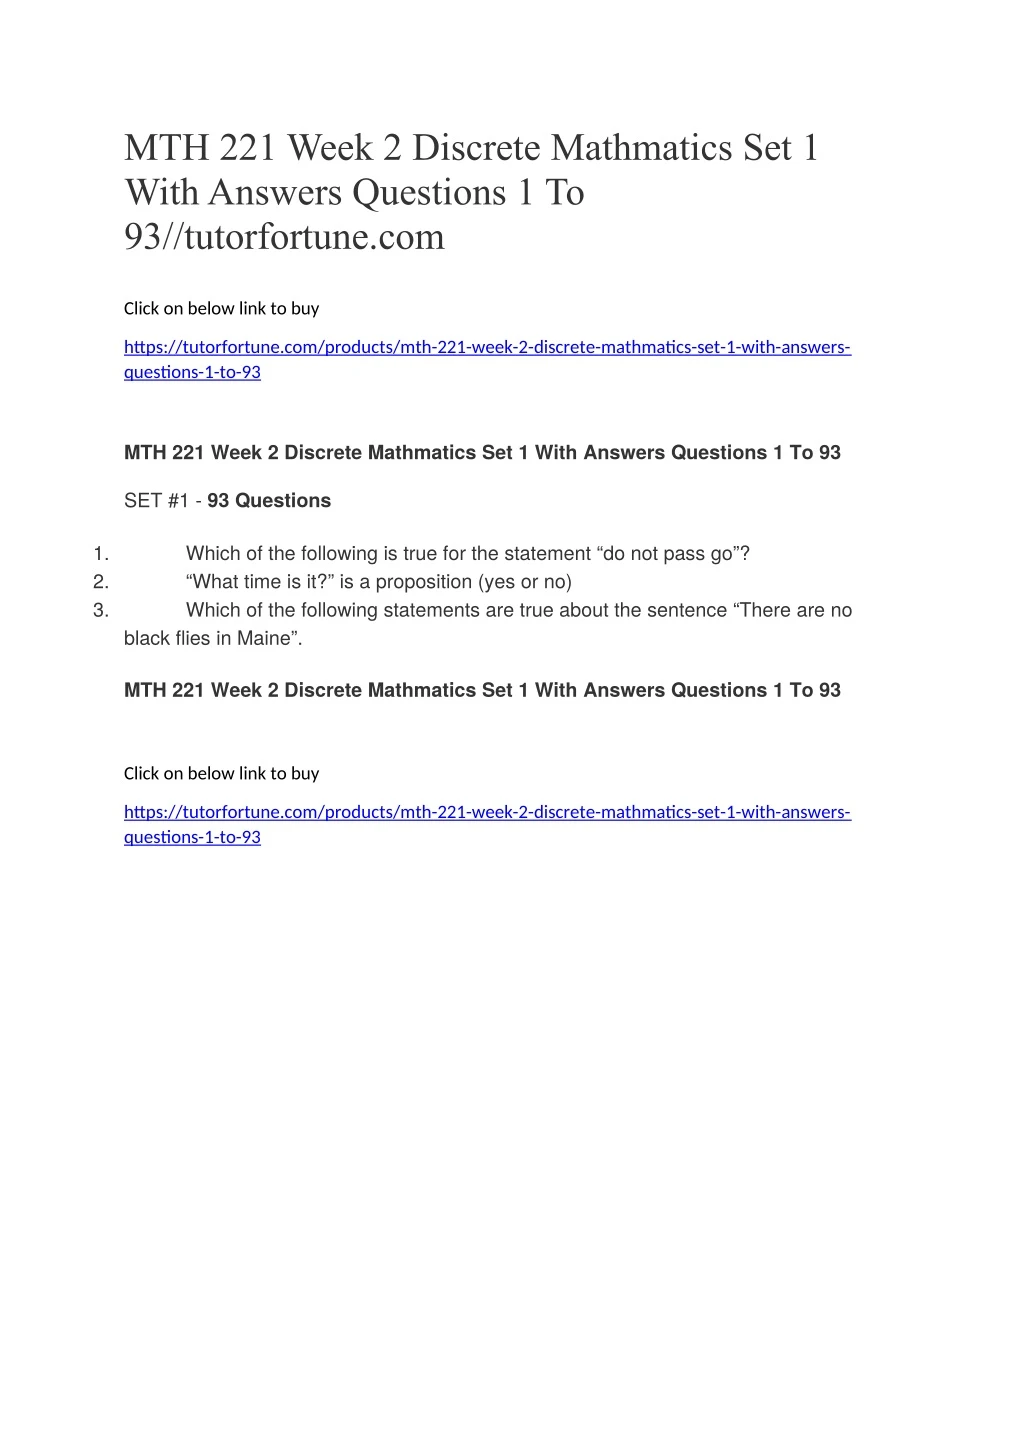 mth 221 week 2 discrete mathmatics set 1 with